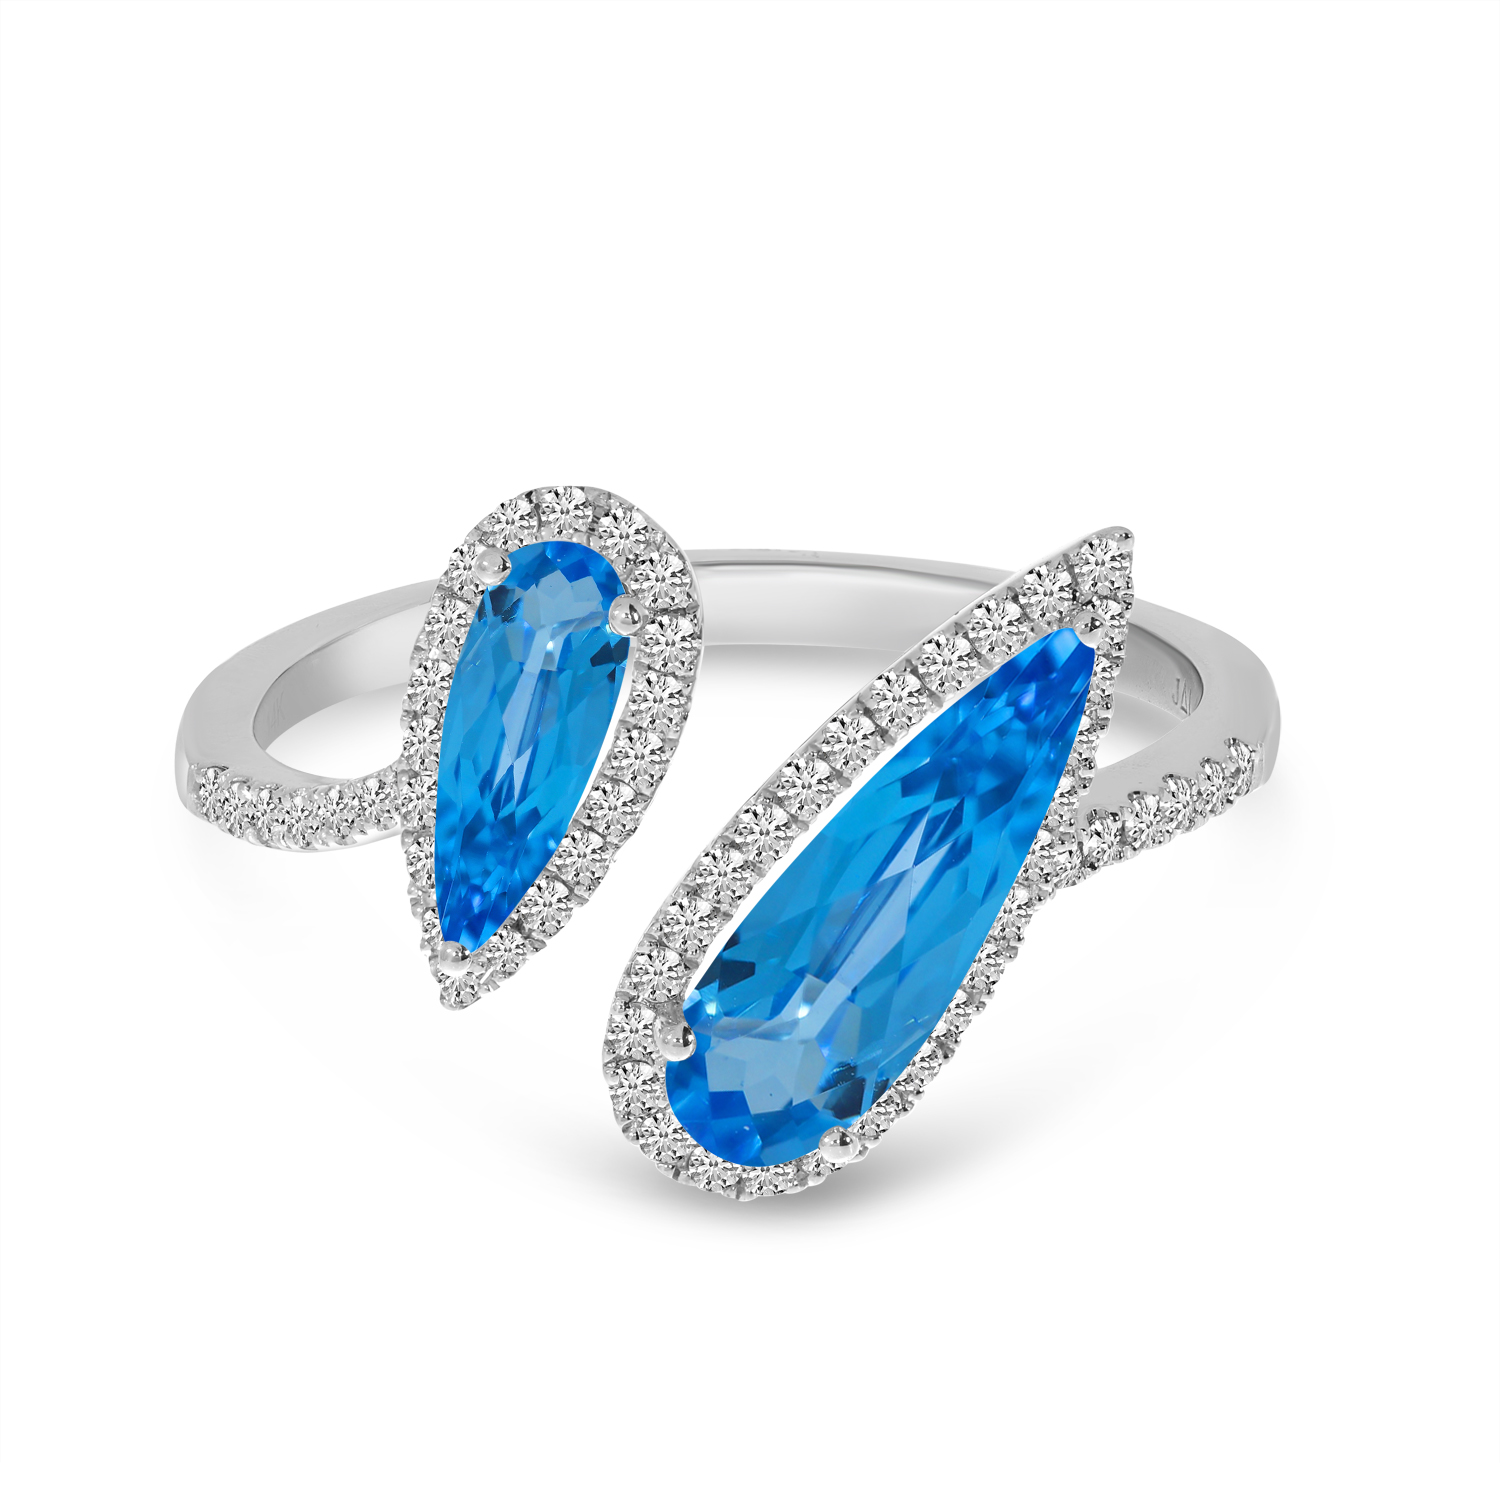 14K White Gold Offset Duo Semi Precious Pear Blue Topaz & Diamond Ring